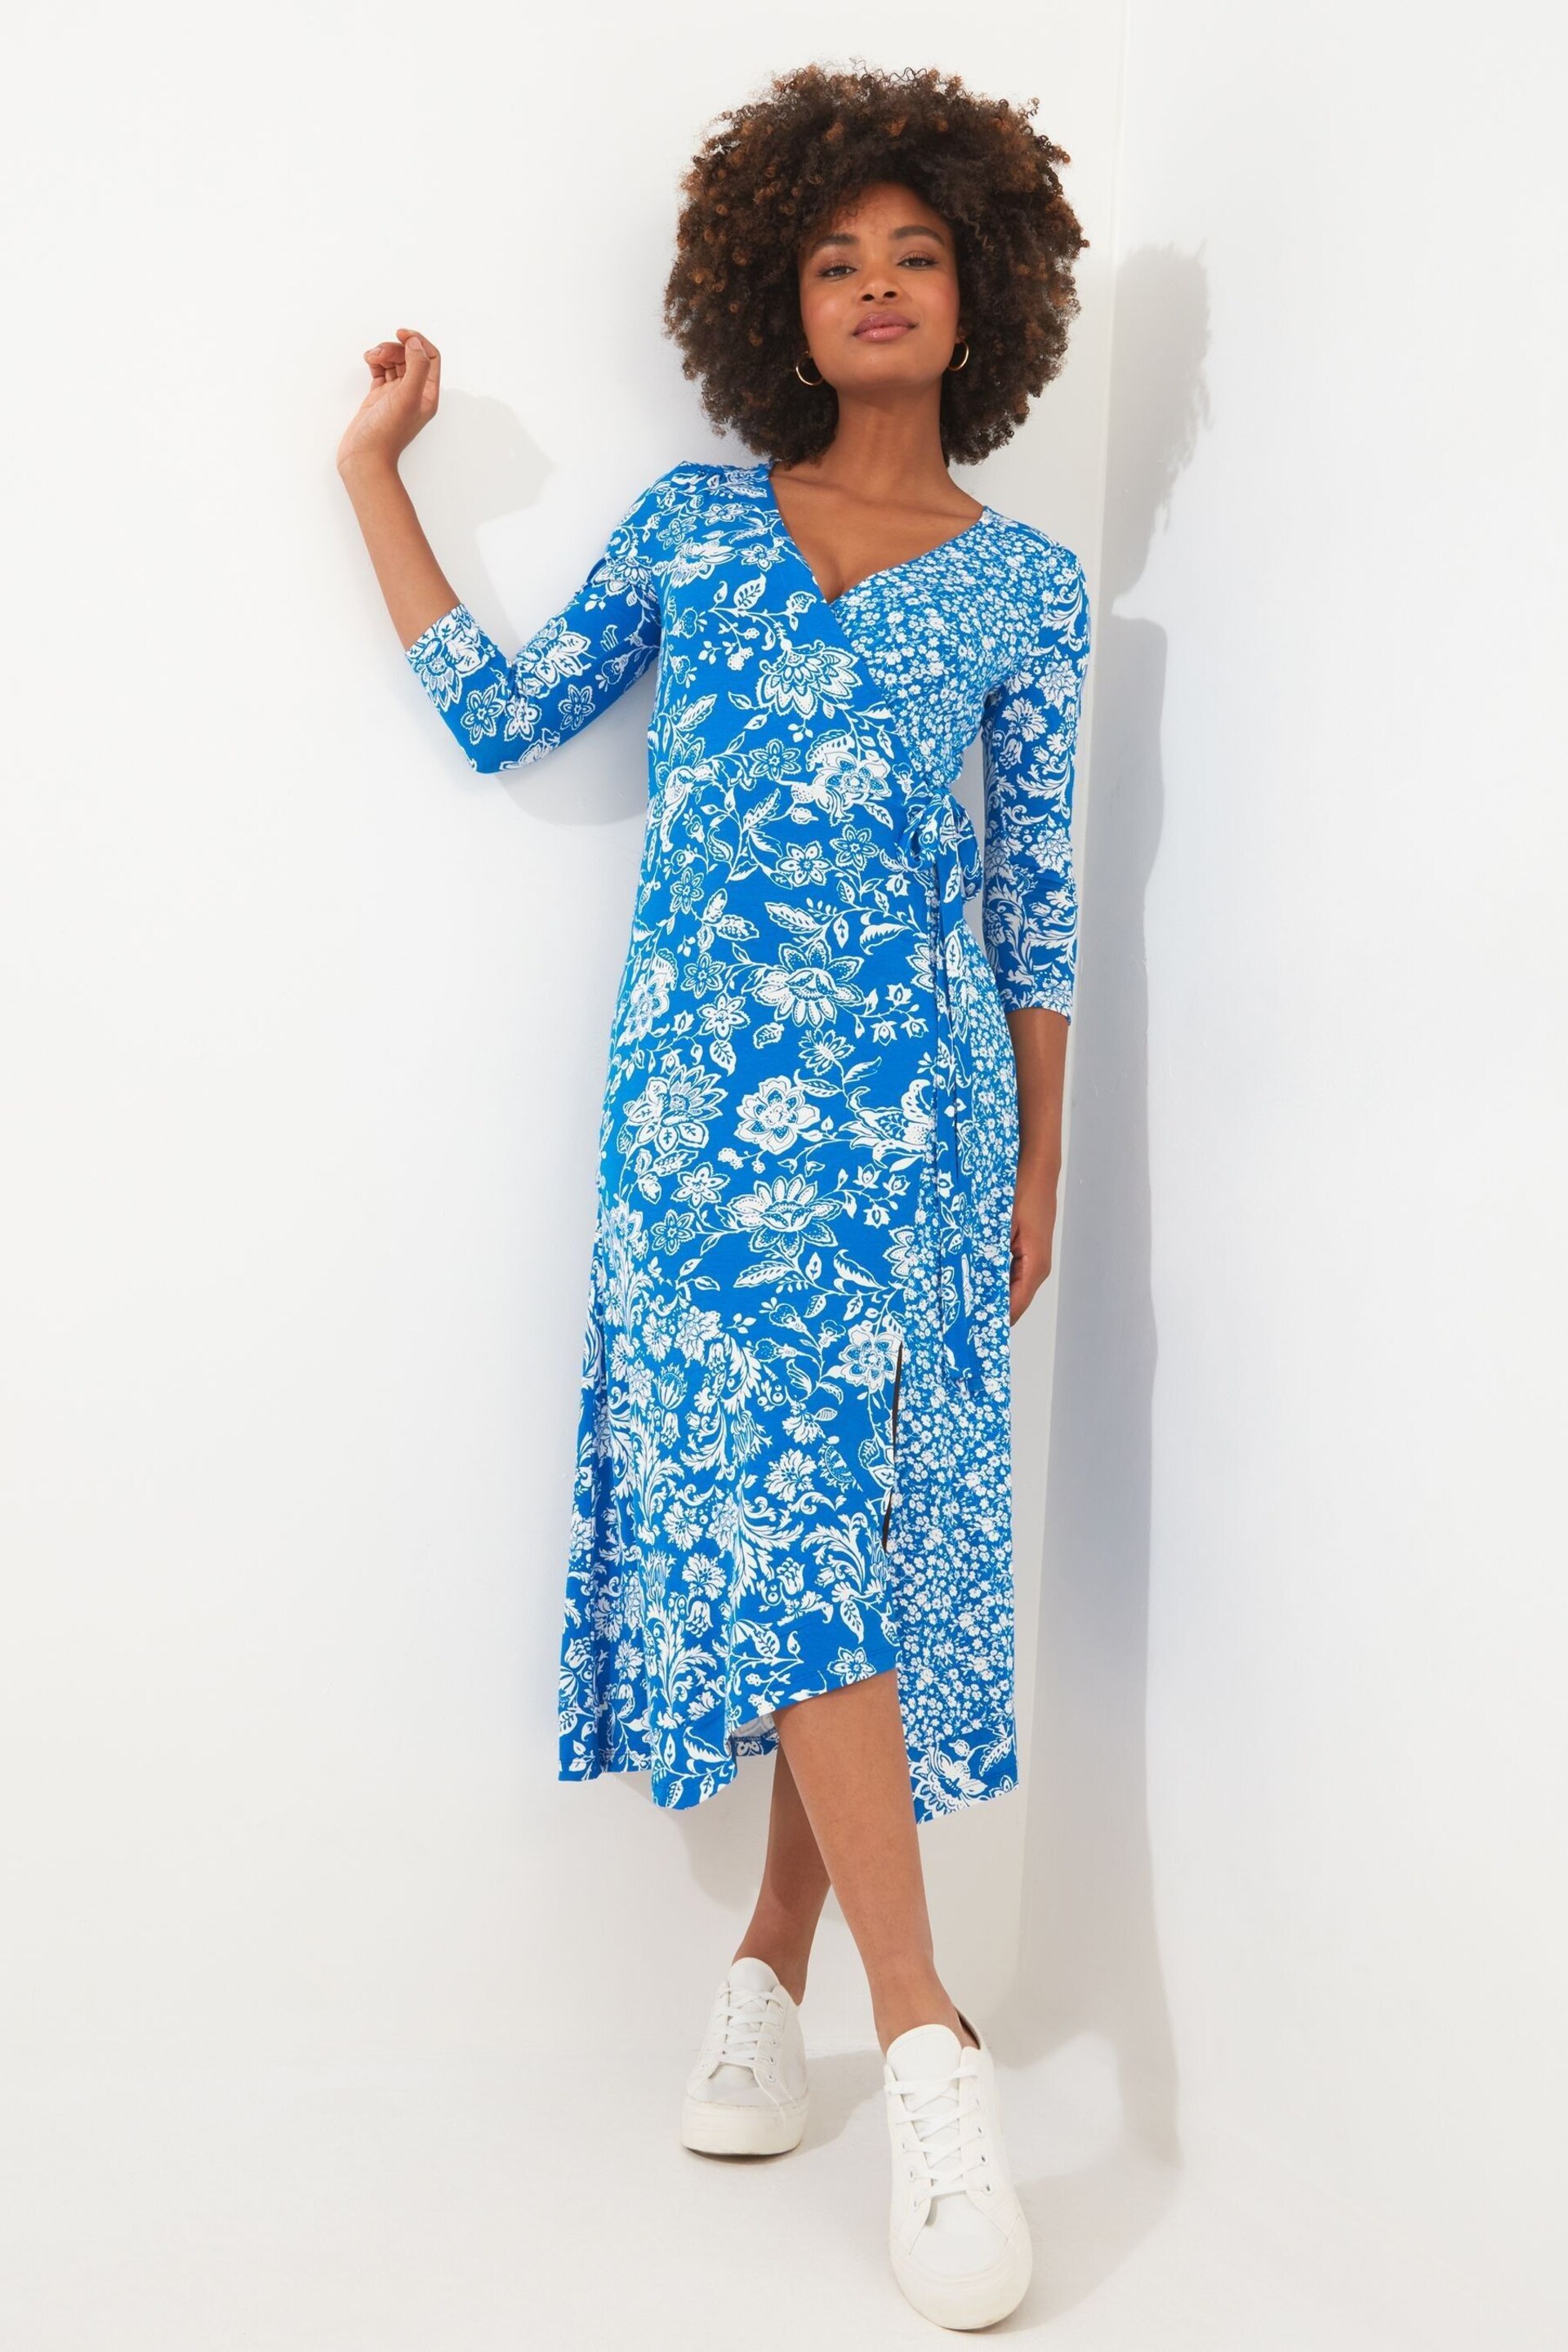 Joe Browns Blue Mixed Print Jersey Dress - Image 2 of 7